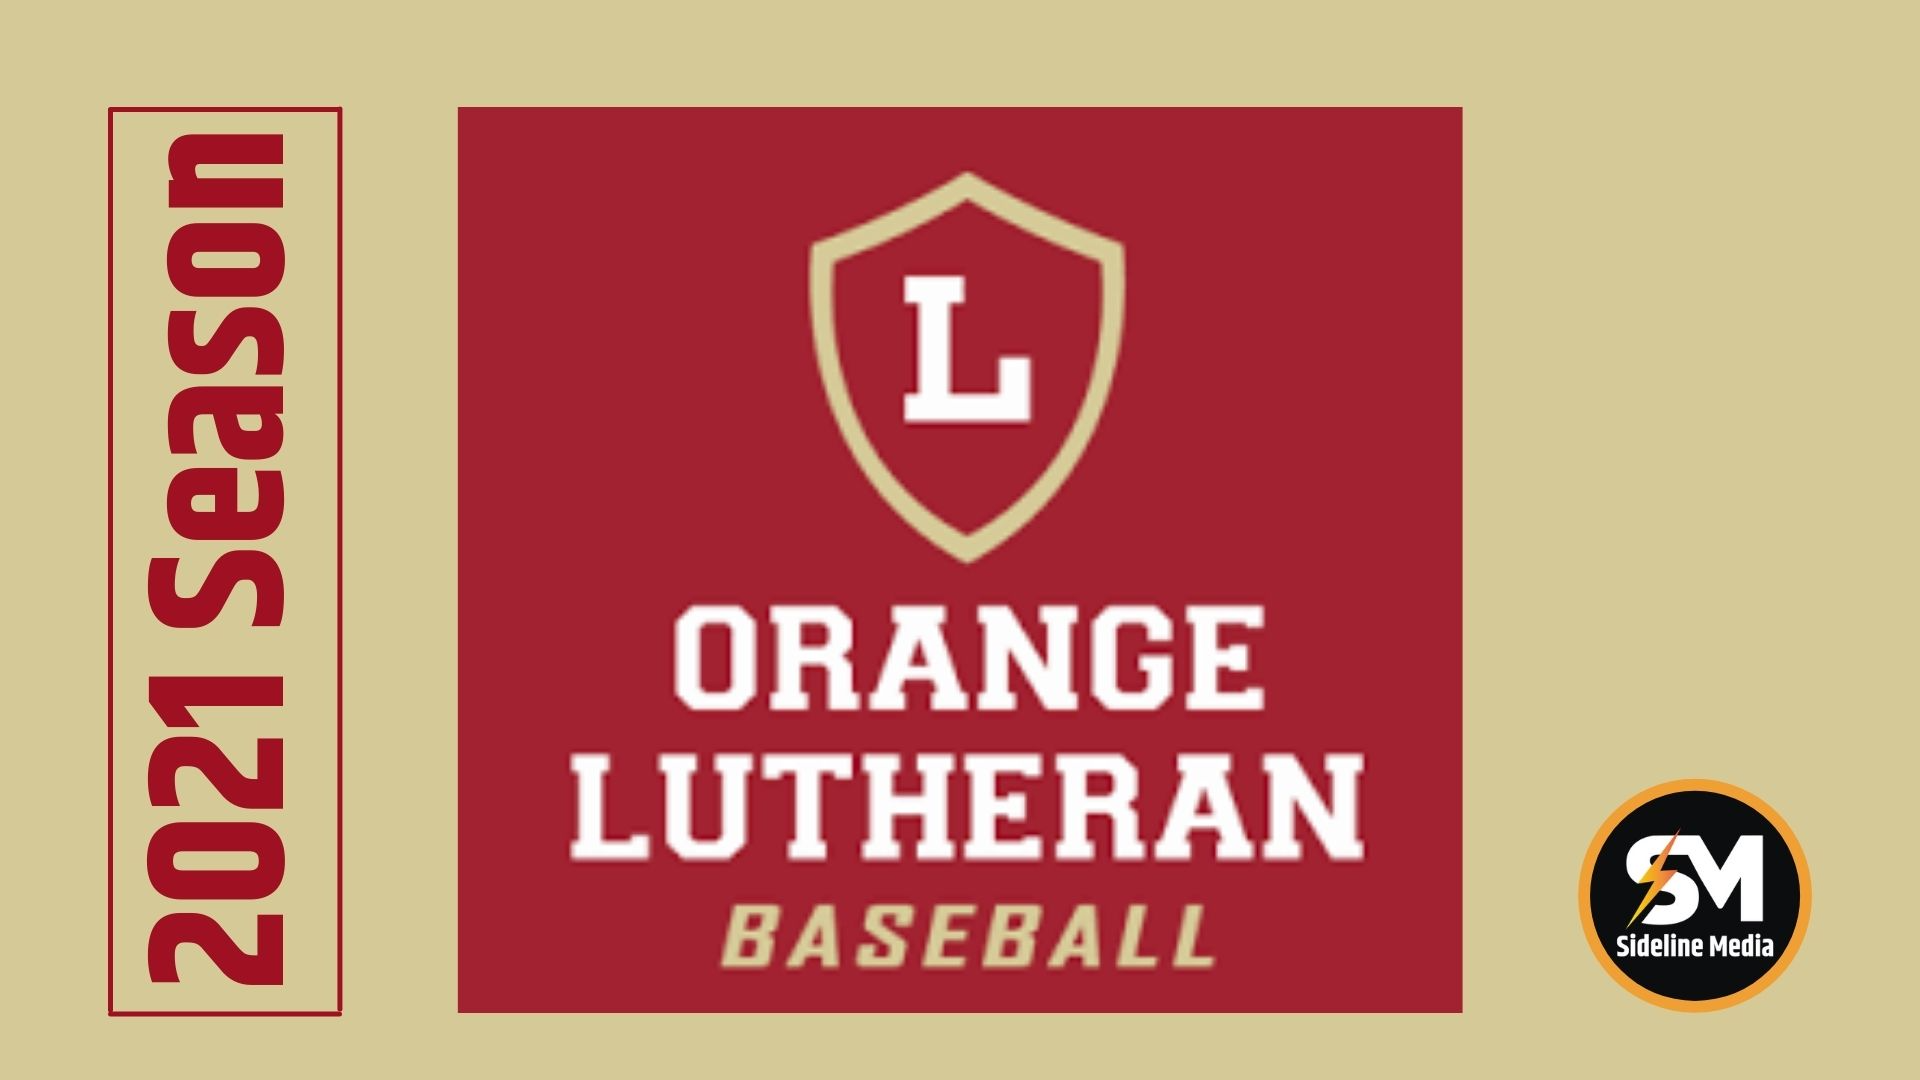 Photo for Orange Lutheran Baseball 2021 Season on ViewStub